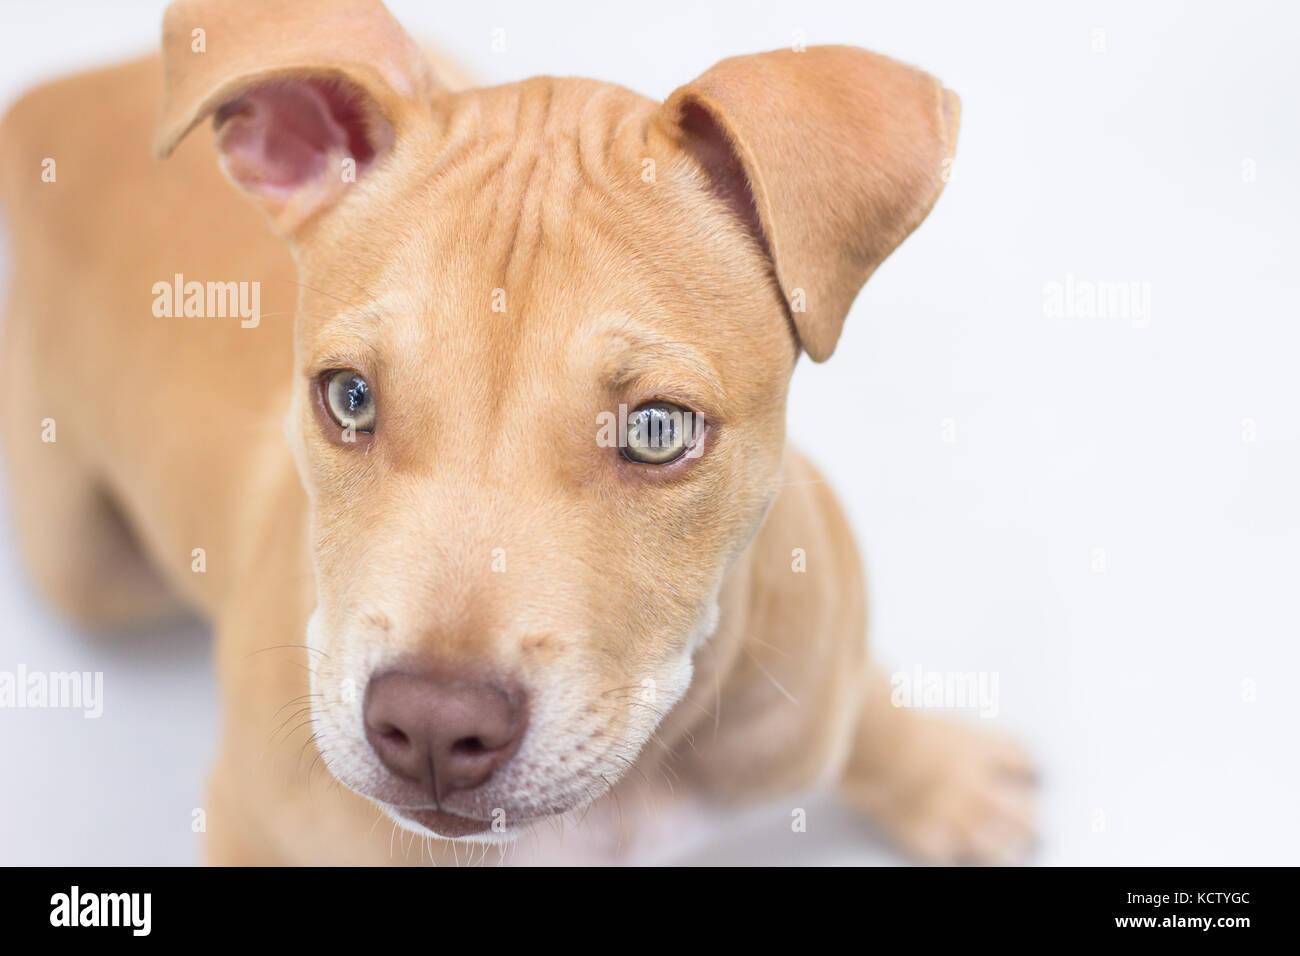 Puppy pit bull dog portrait face Stock Photo